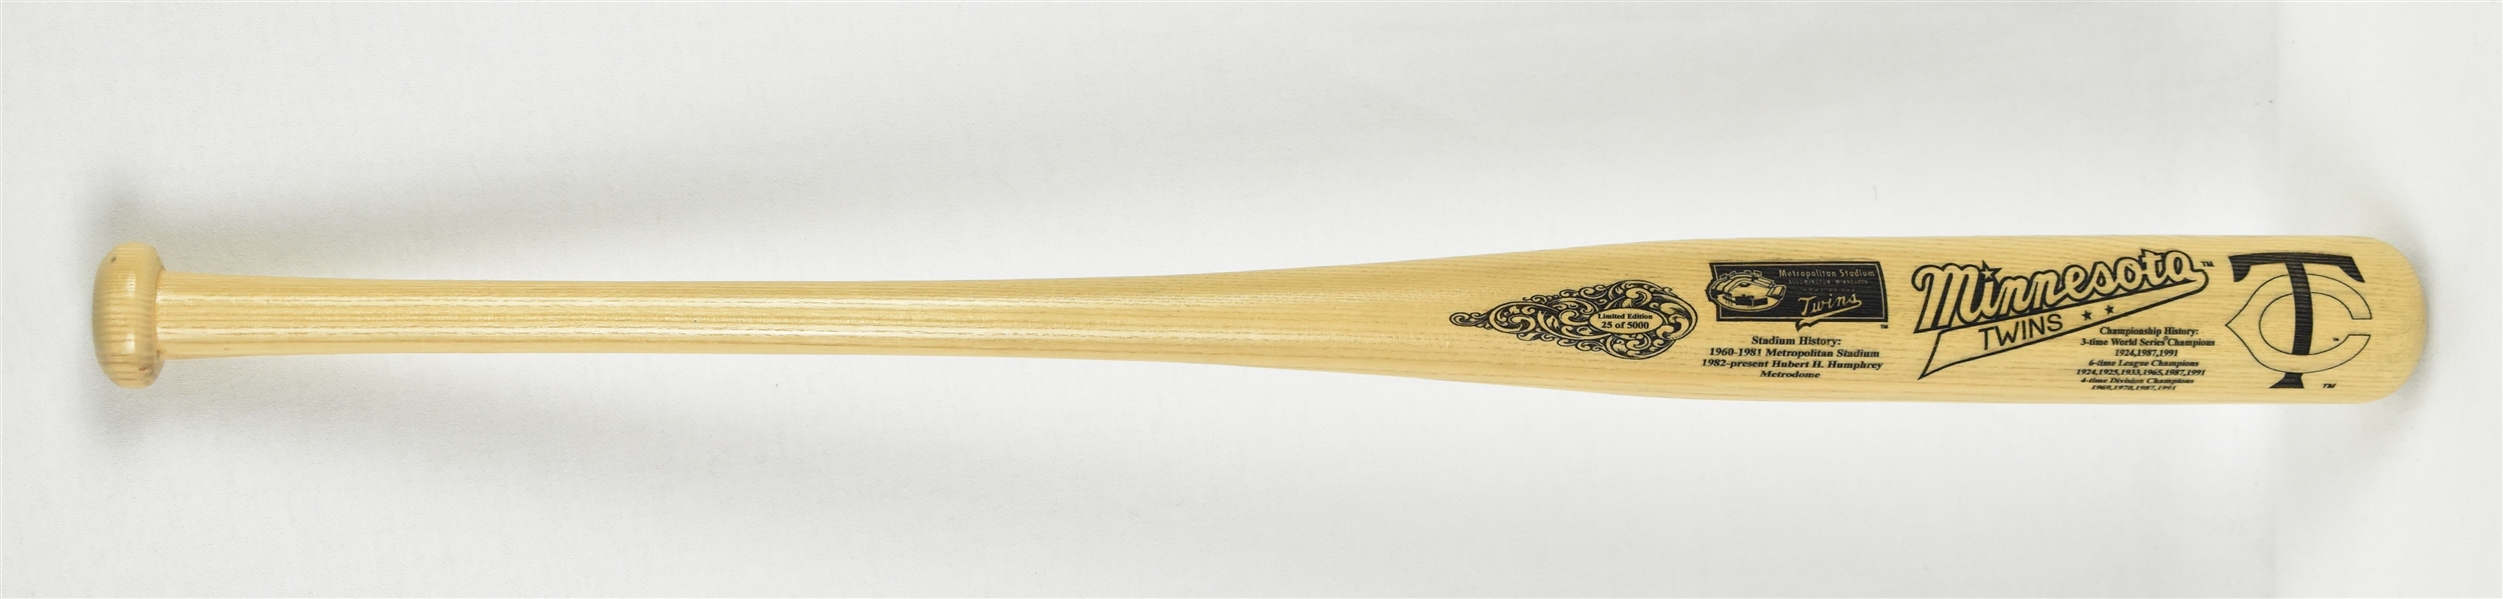 Minnesota Twins Engraved Limited Edition Bat